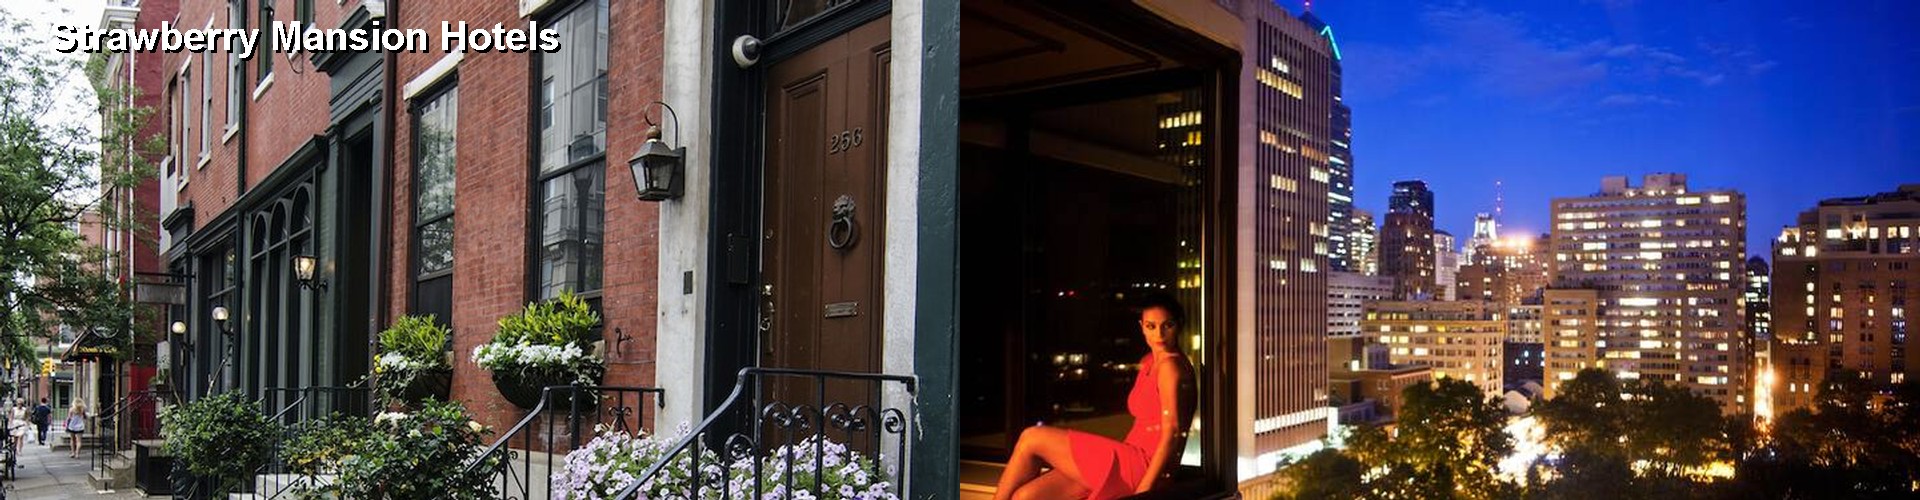 4 Best Hotels near Strawberry Mansion